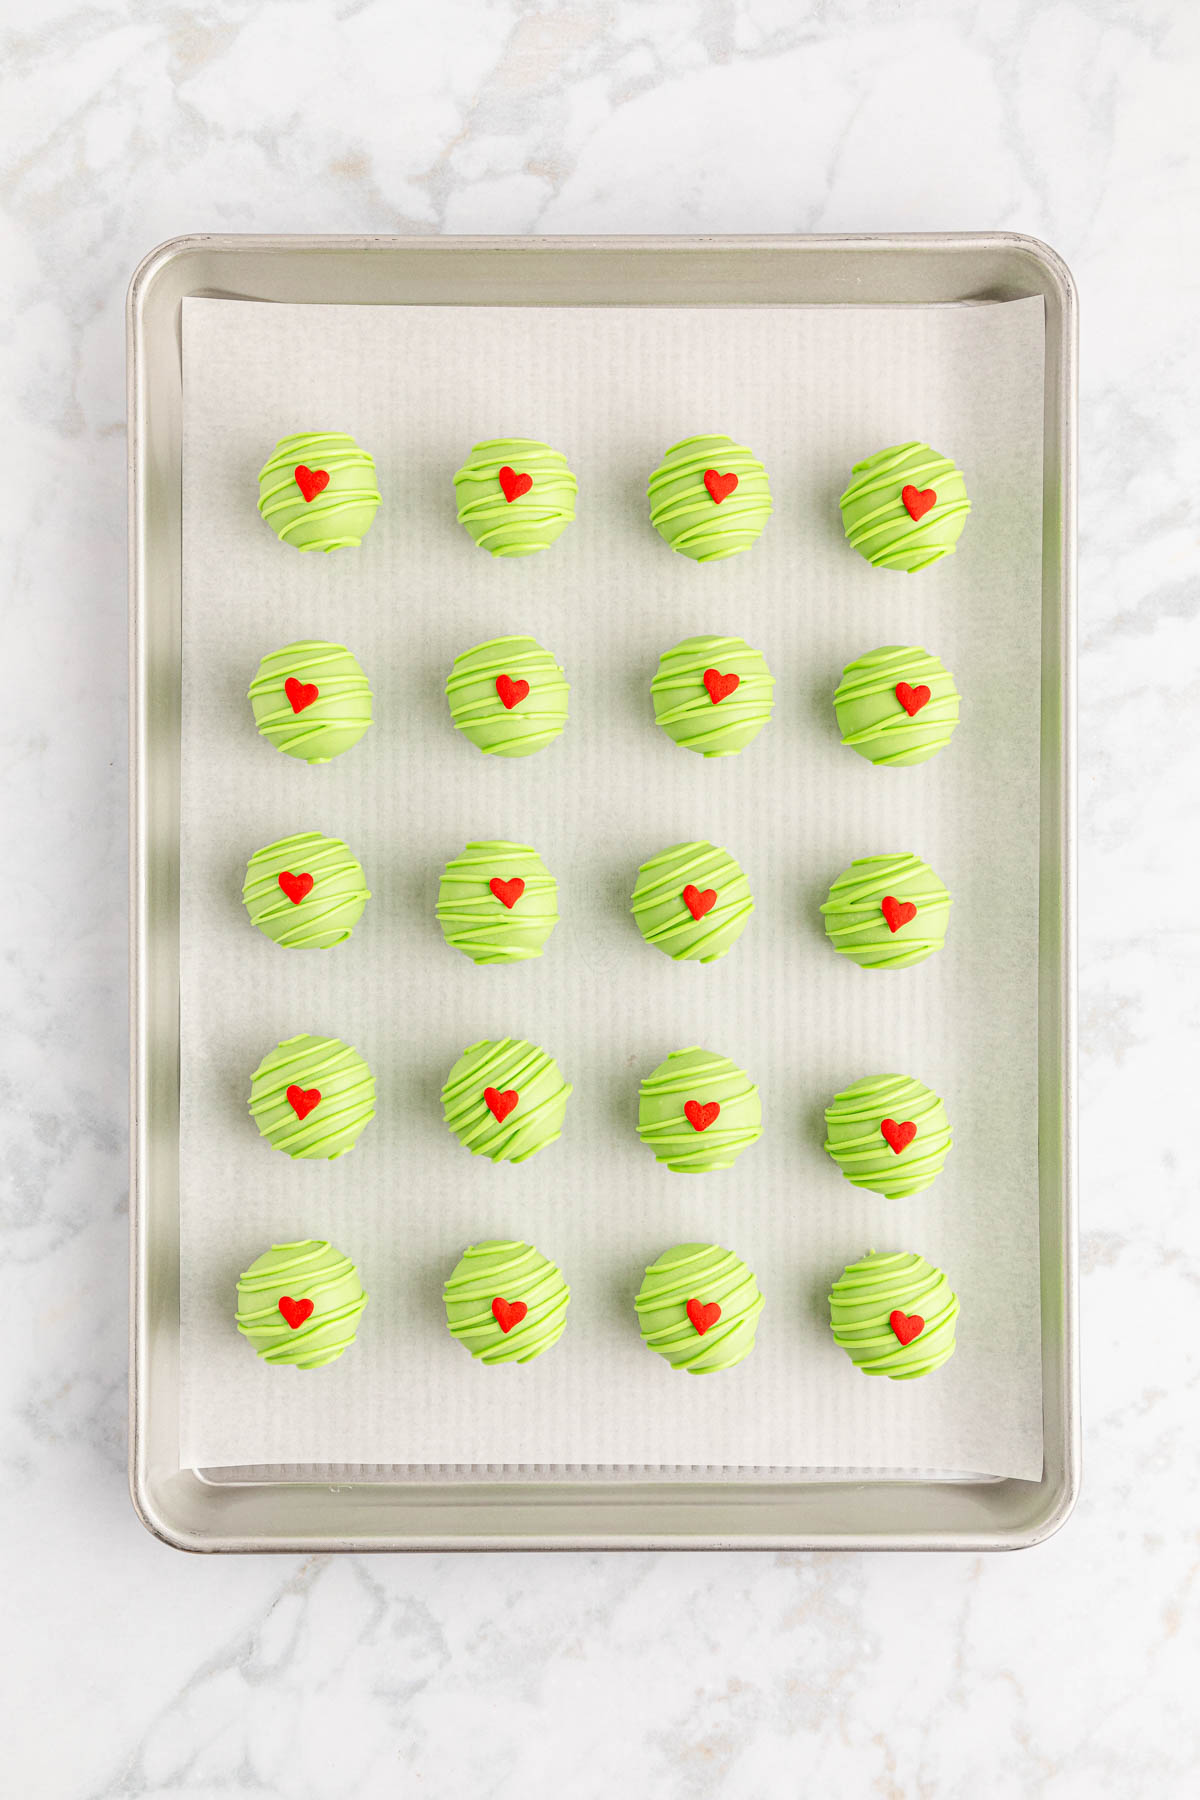 Green heart decorated Oreo balls on a baking sheet.